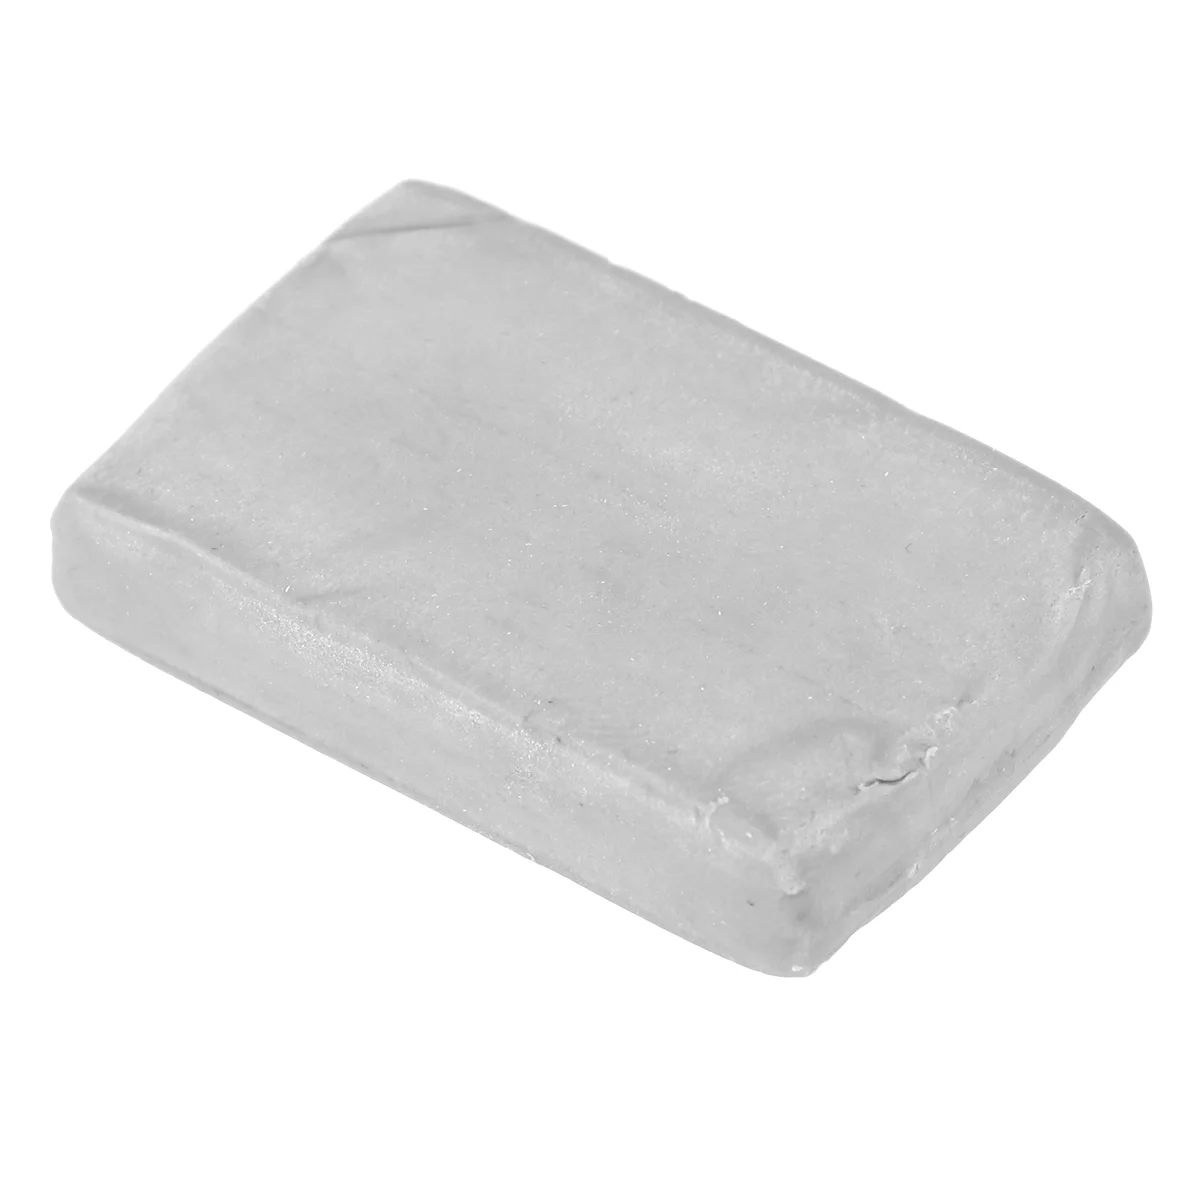 

6PCS Kneaded Eraser Grey Durable Sketch Rubber Kneadable Rubber Eraser Set